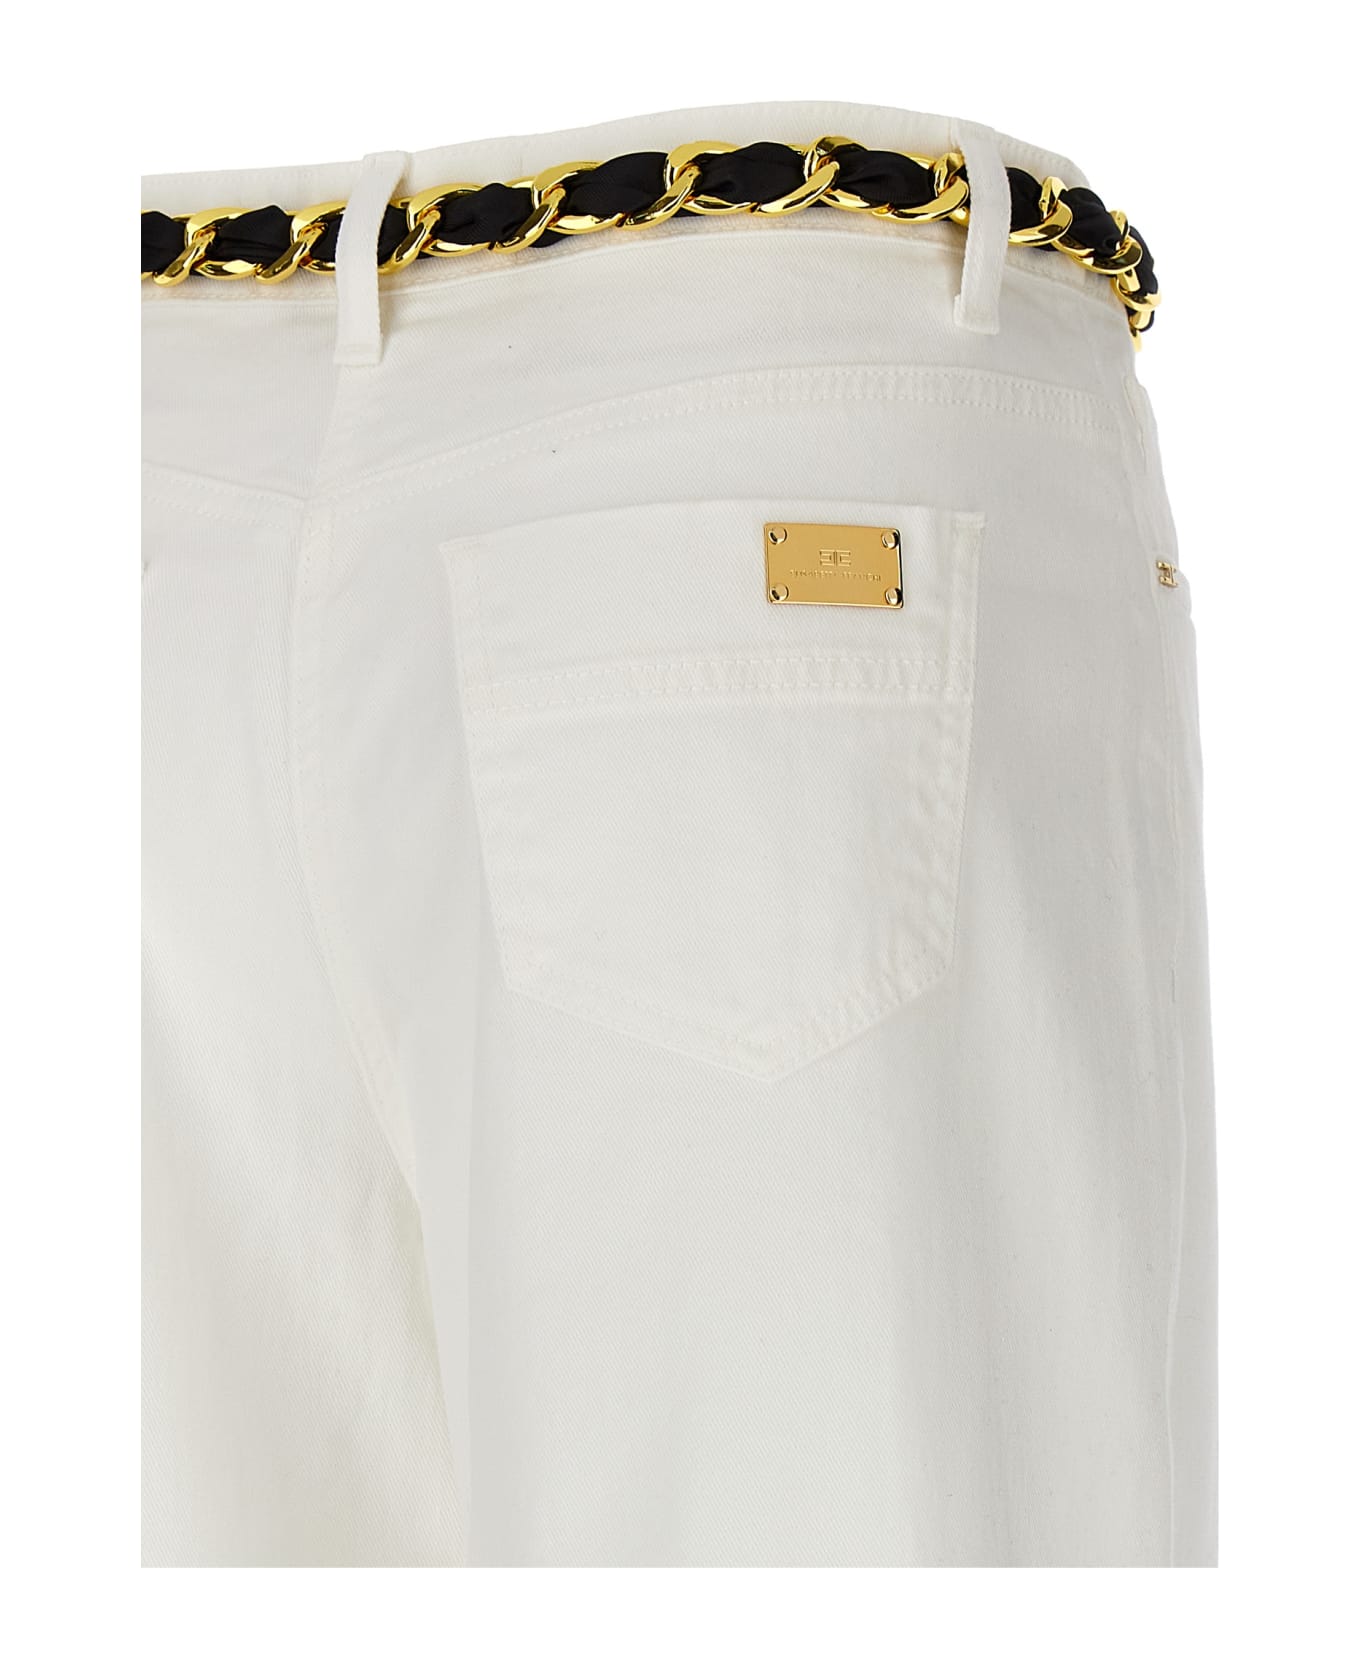 Elisabetta Franchi Palazzo Scarf Detail Jeans - White